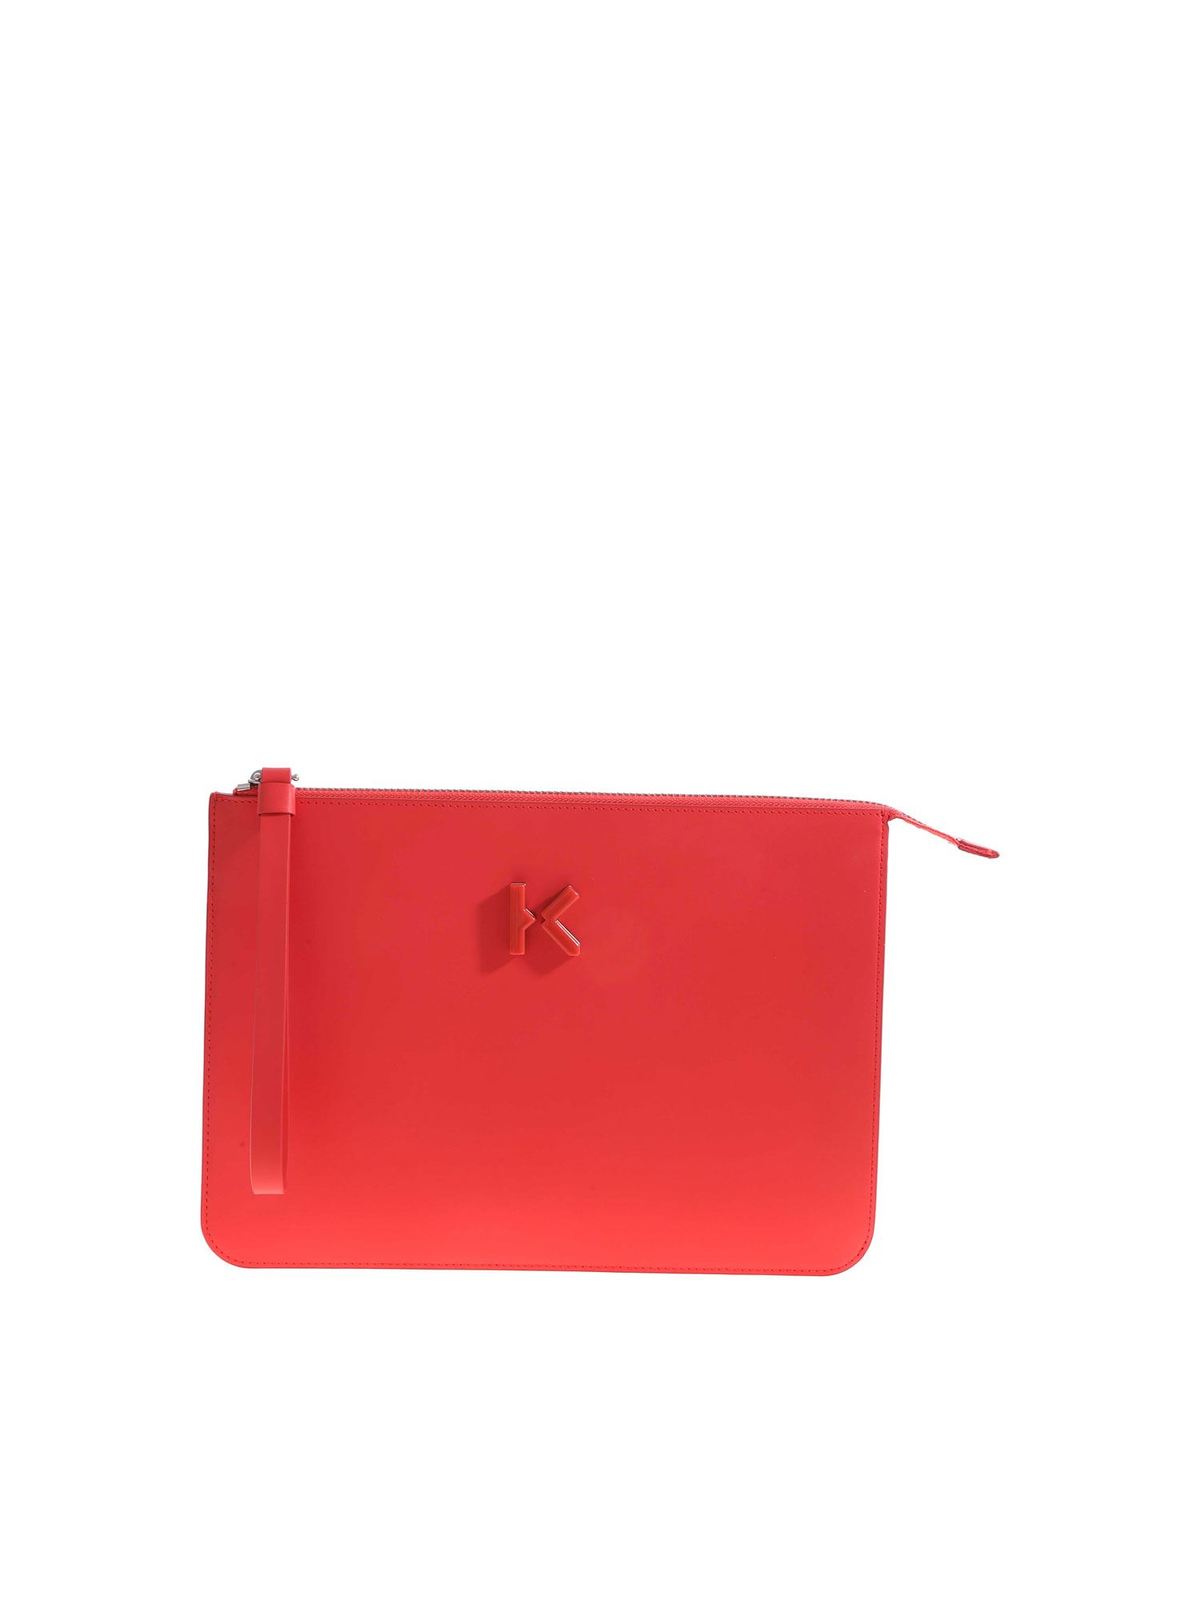 KENZO LOGO DETAIL CLUTCH BAG IN RED